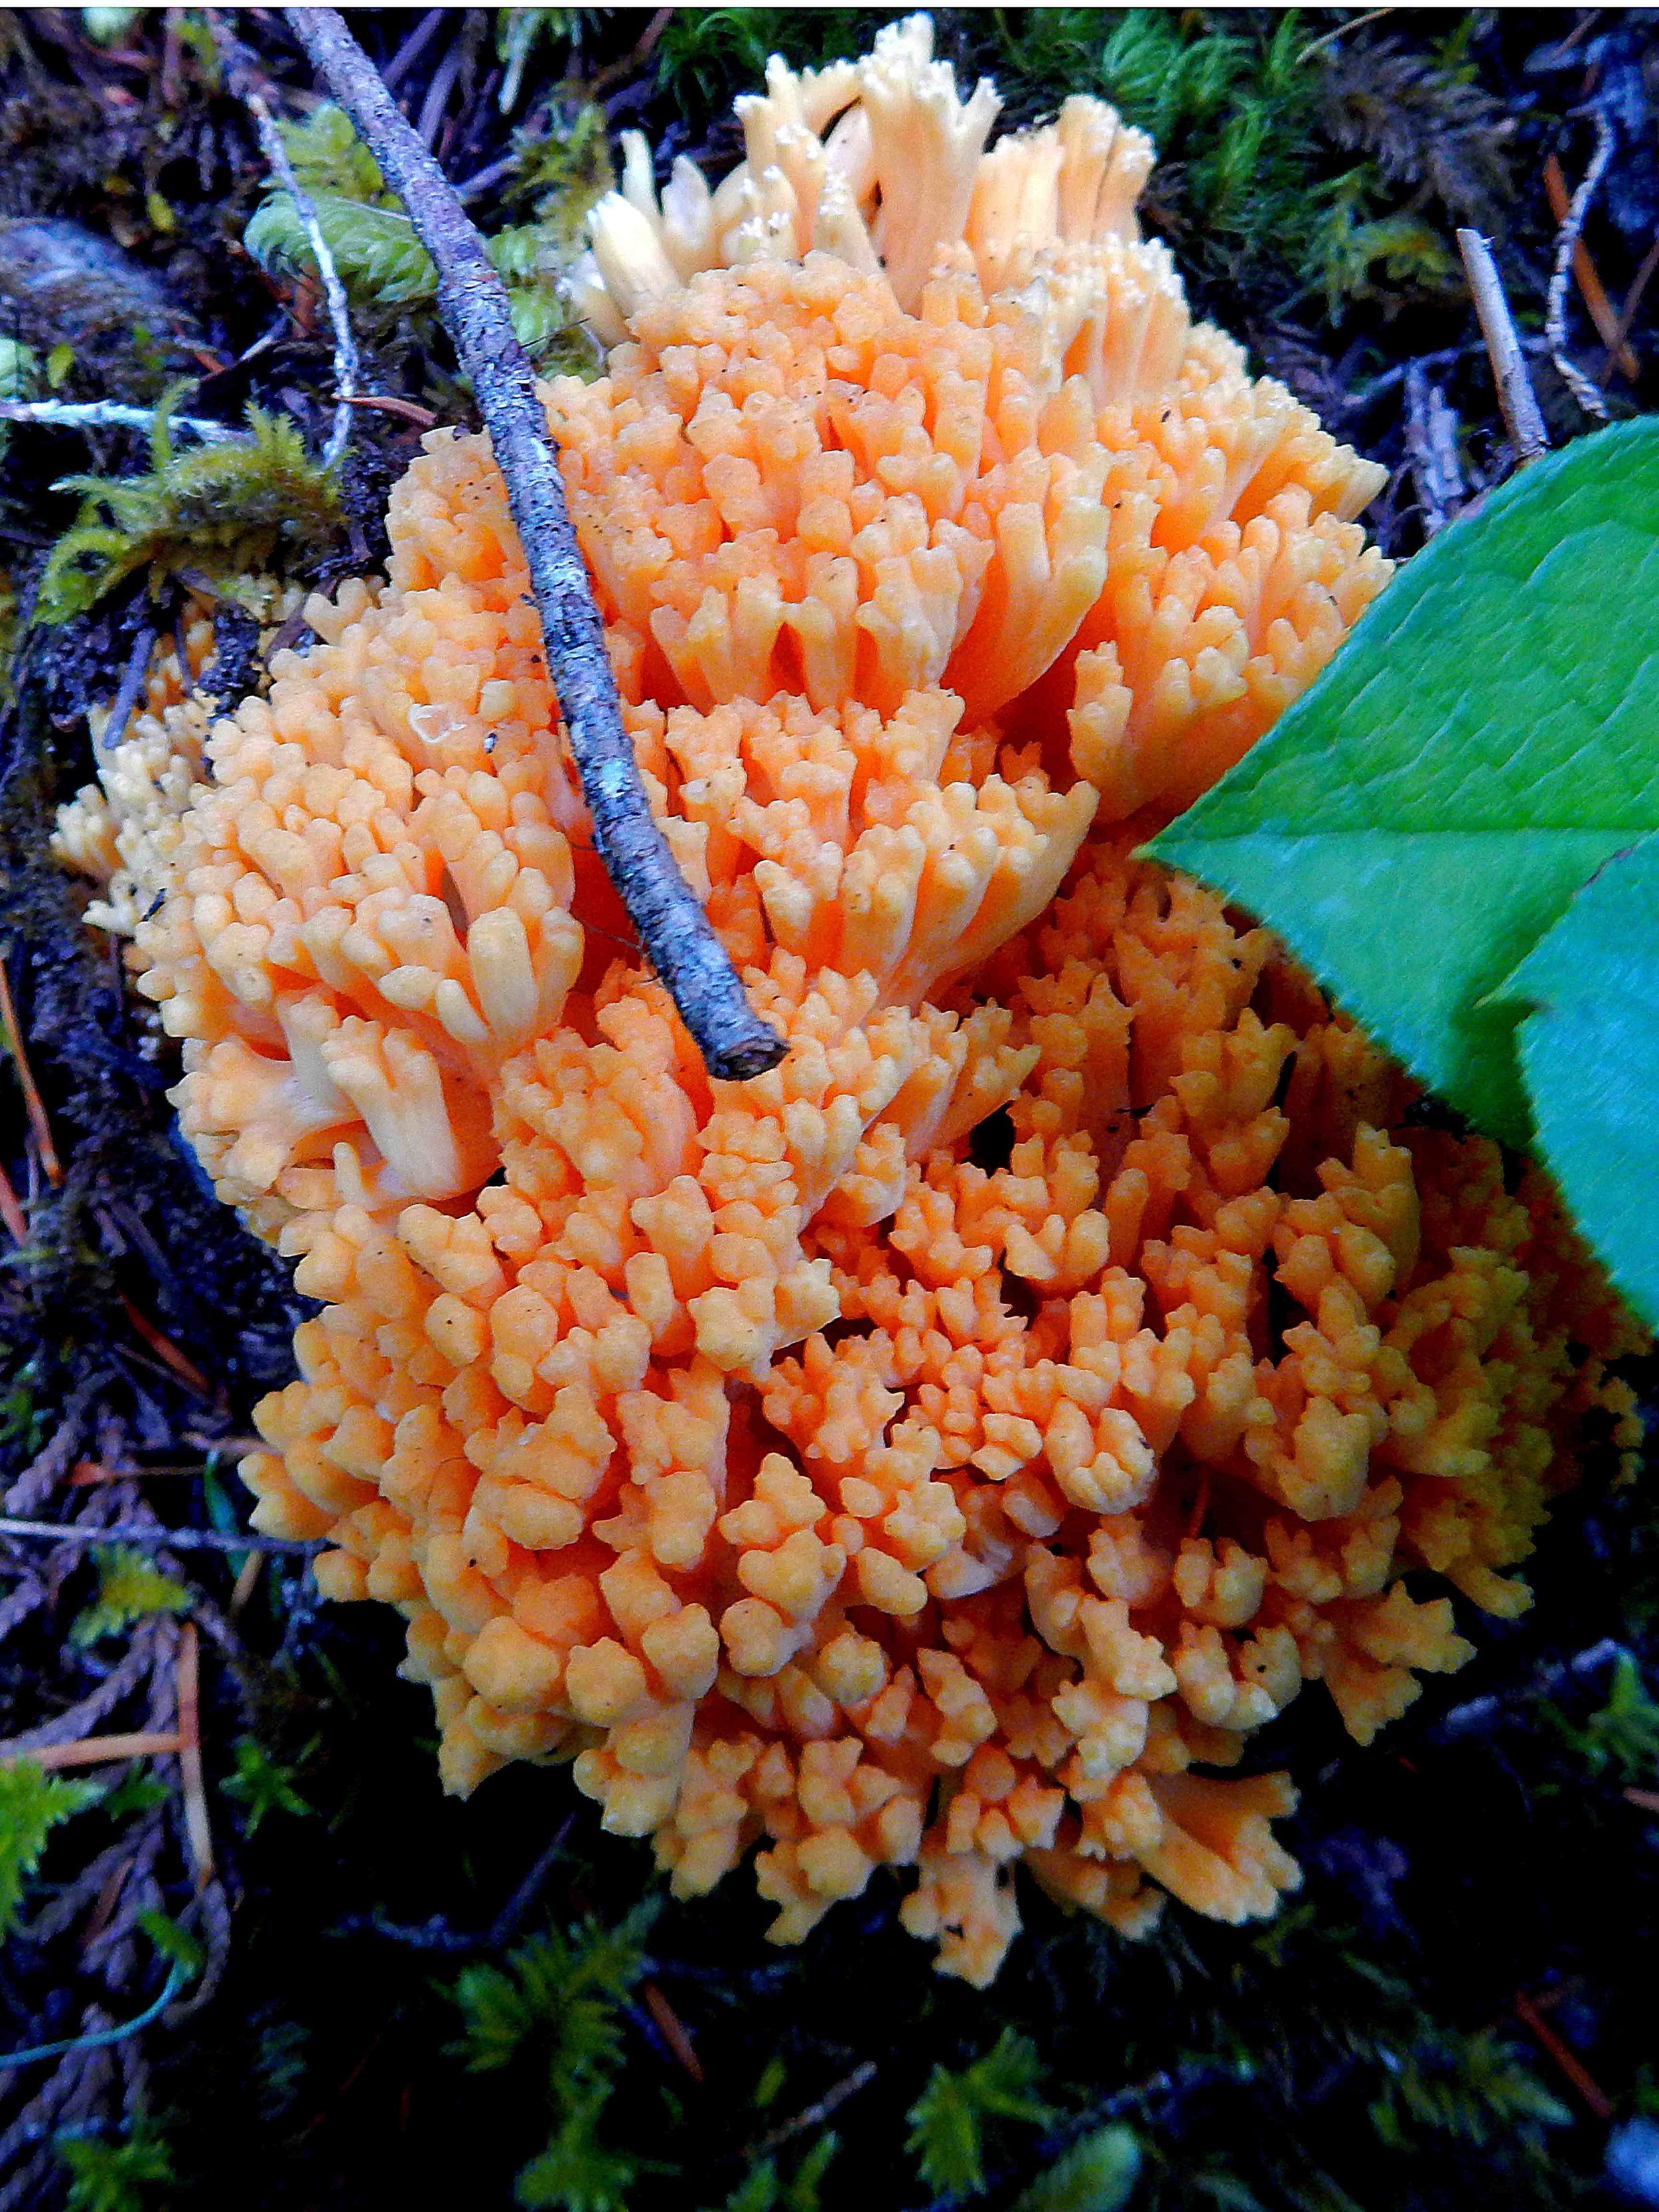  SUMMER - Coral mushroom 